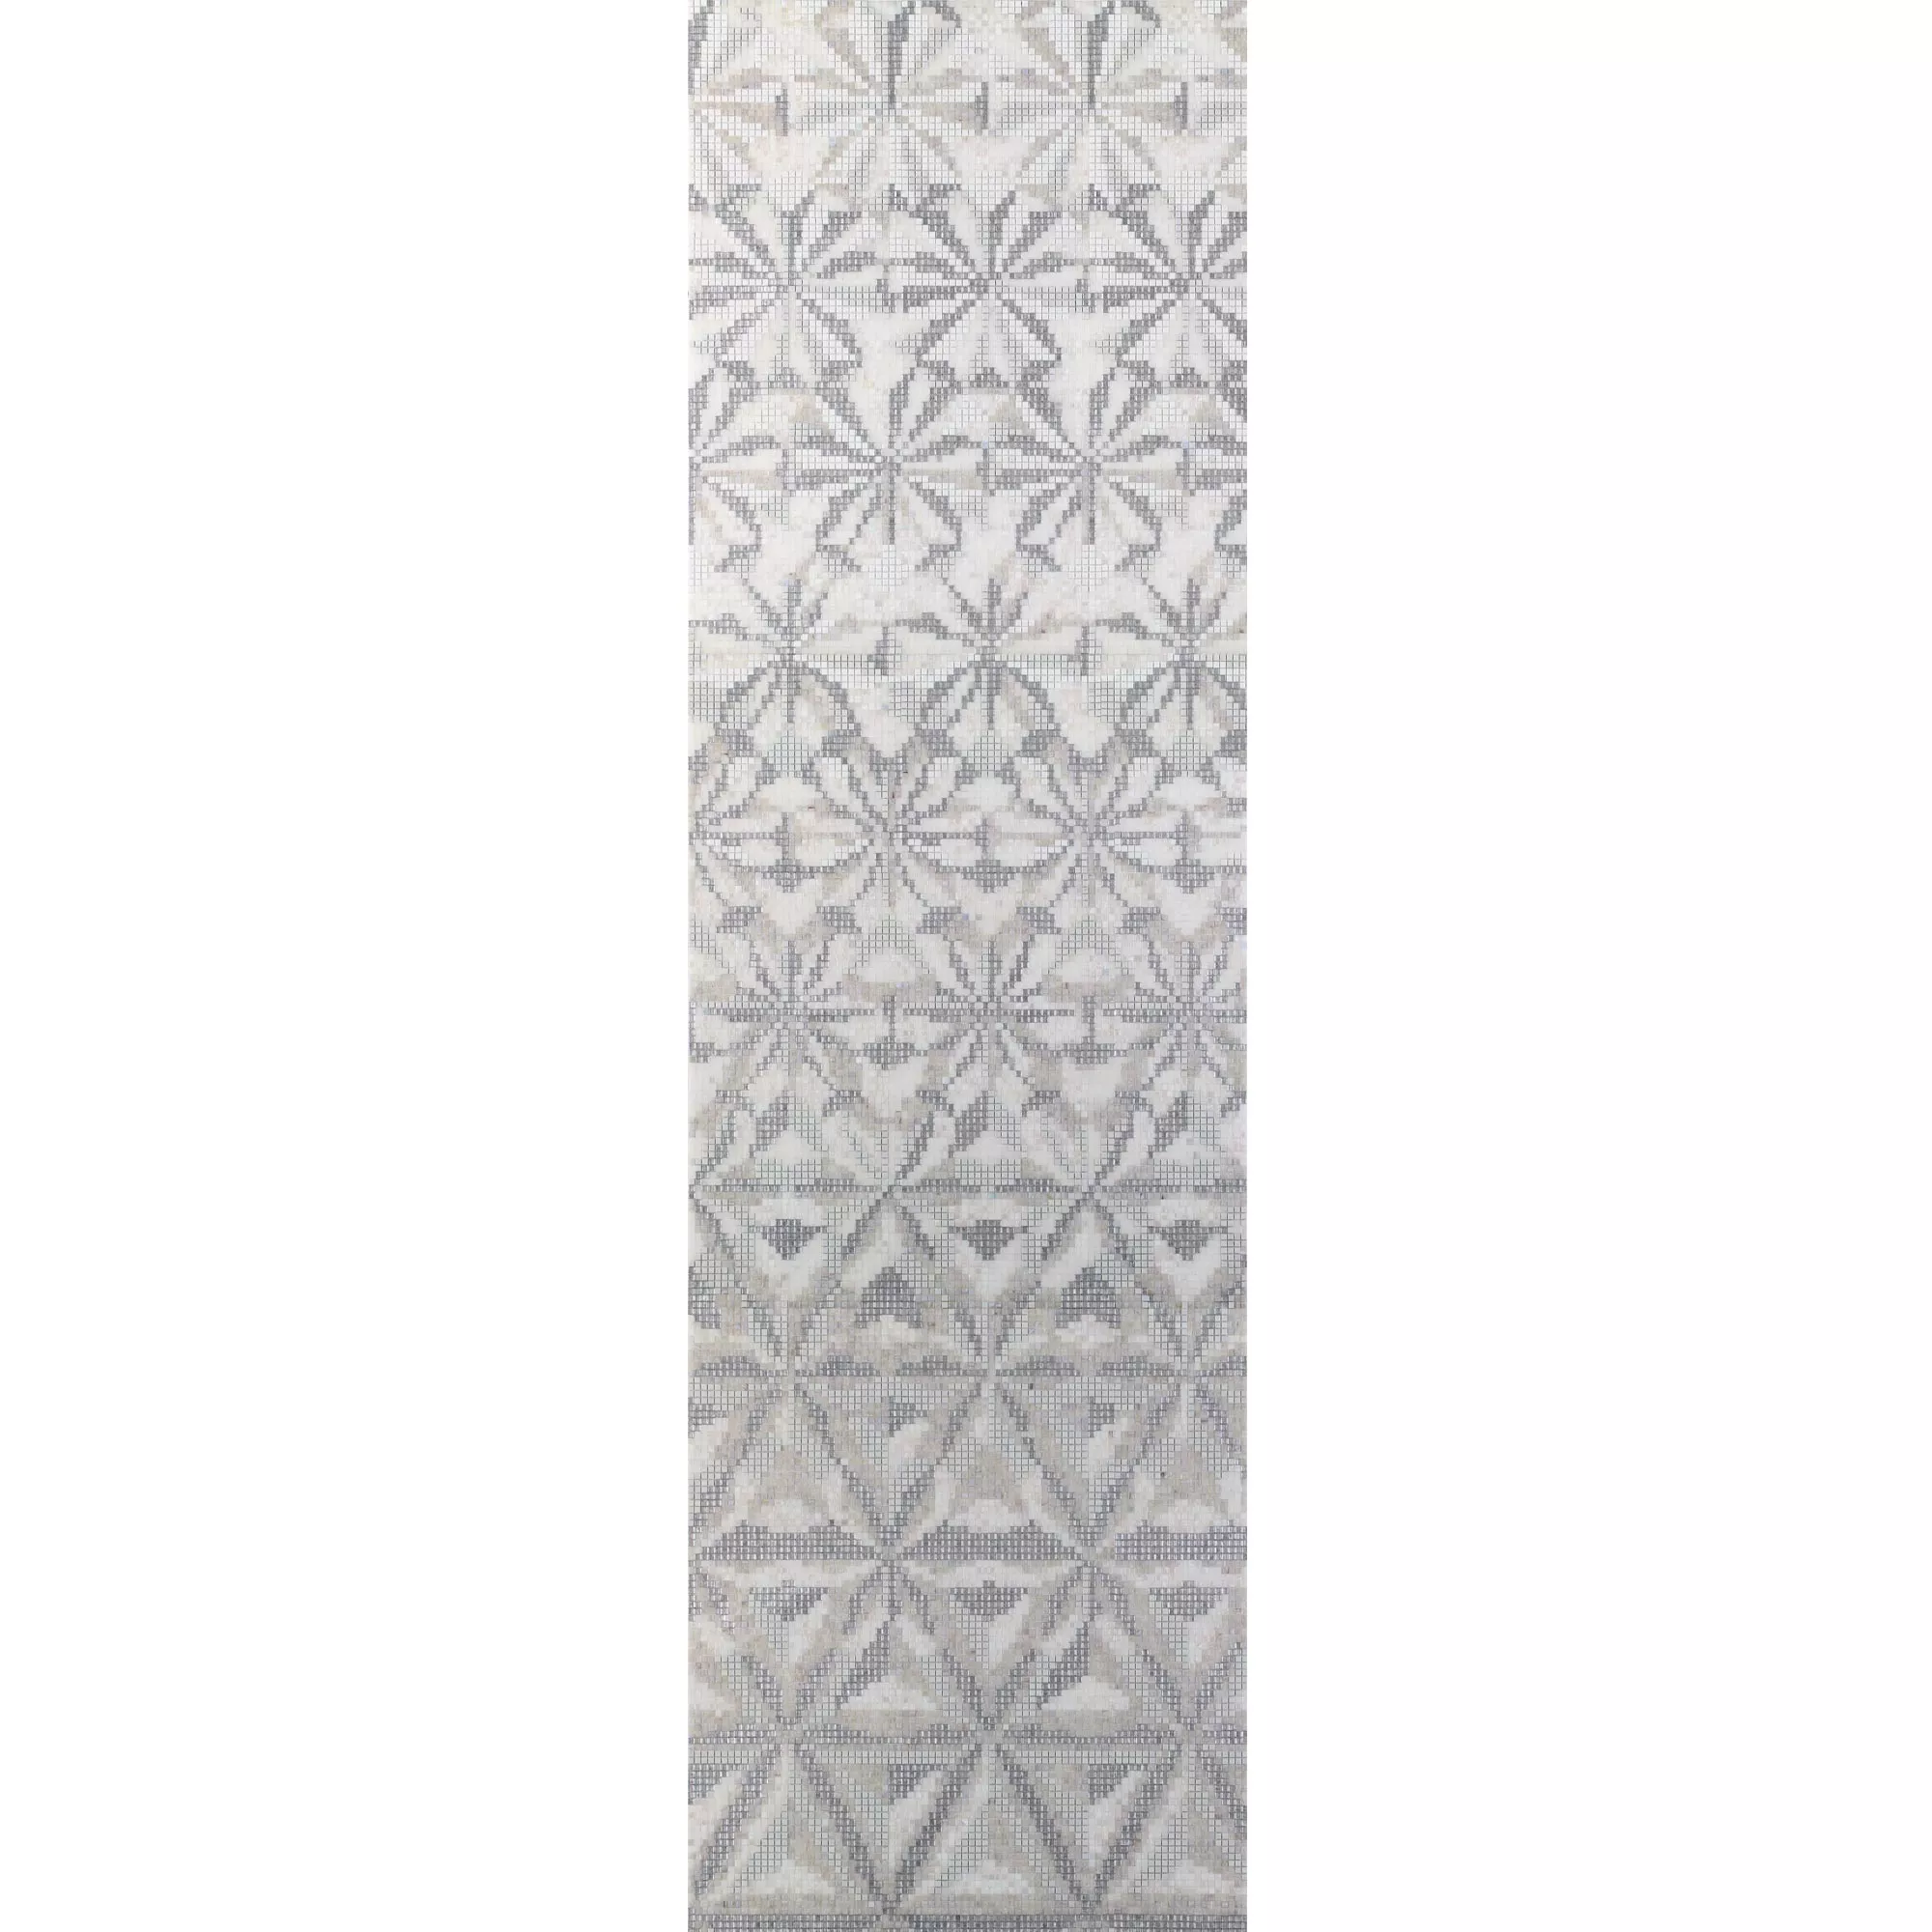 Glass Mosaic Picture Magicflower White 110x240cm